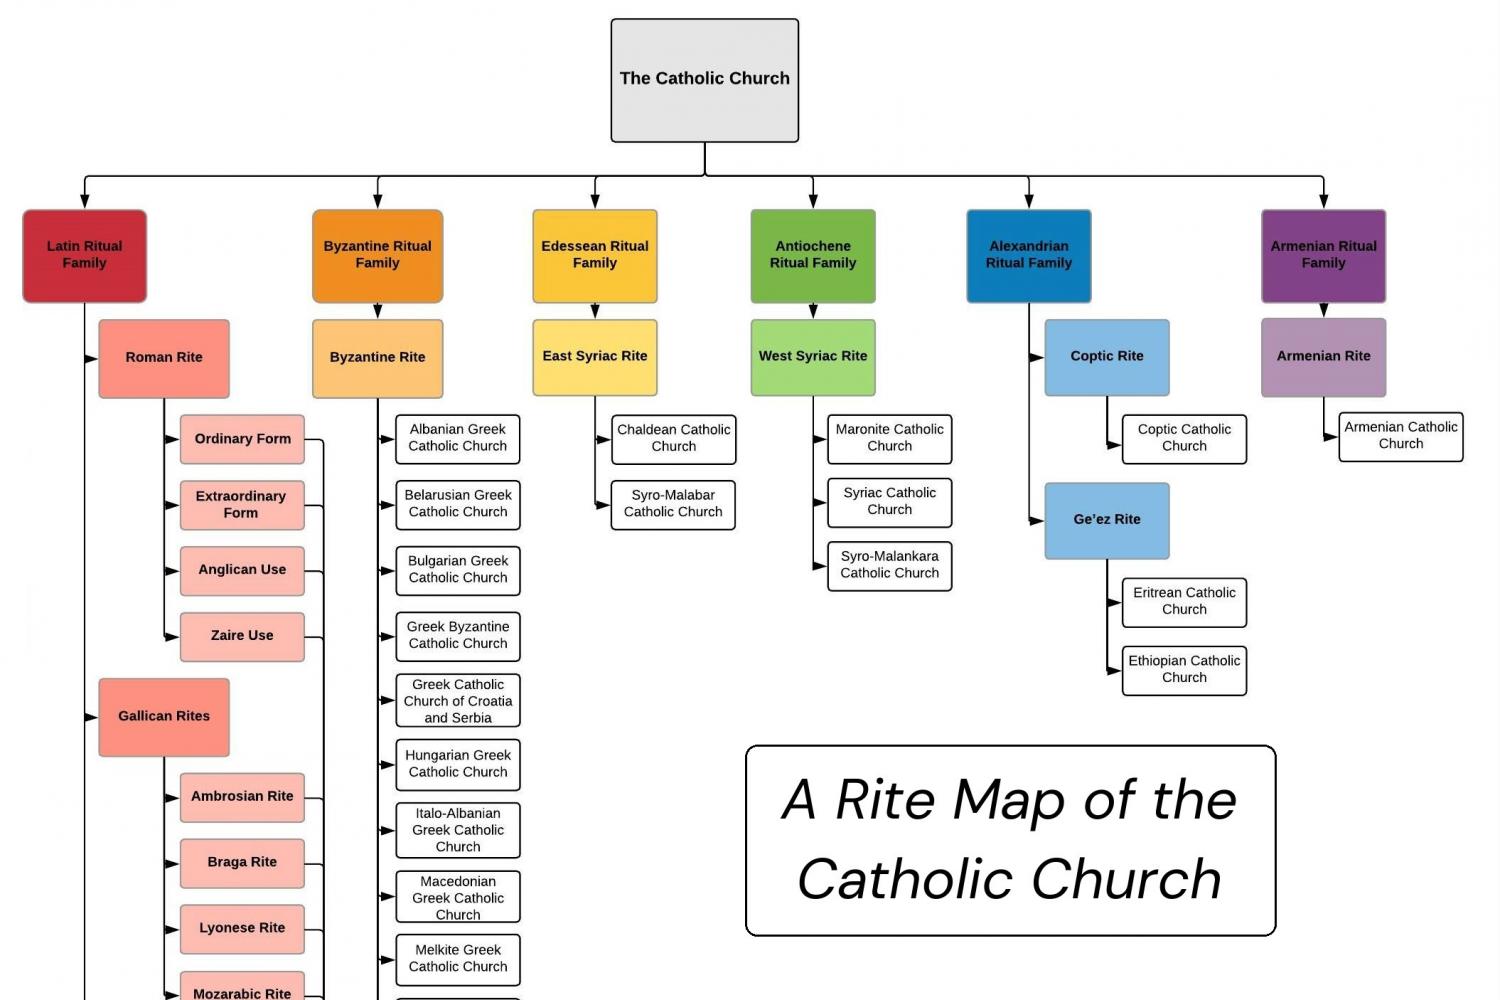 The rites and liturgies of the Catholic Church thumbnail